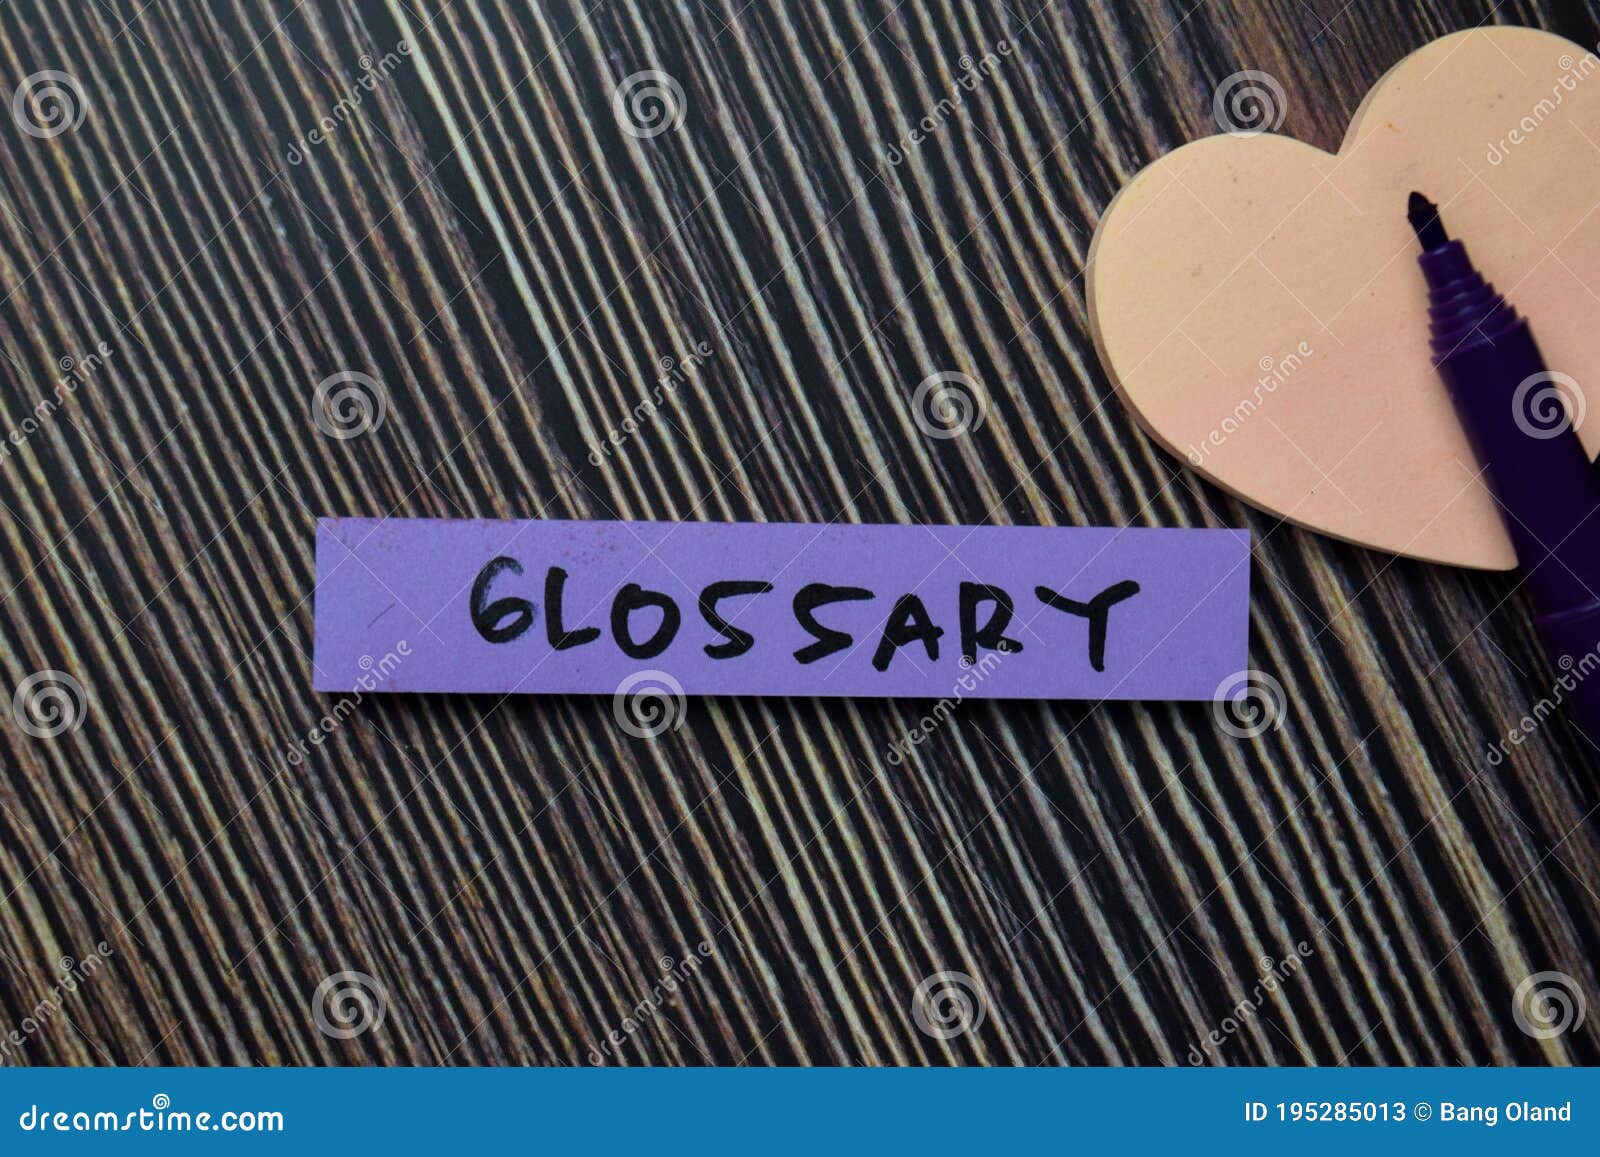 glossary write on sticky notes  on office desk